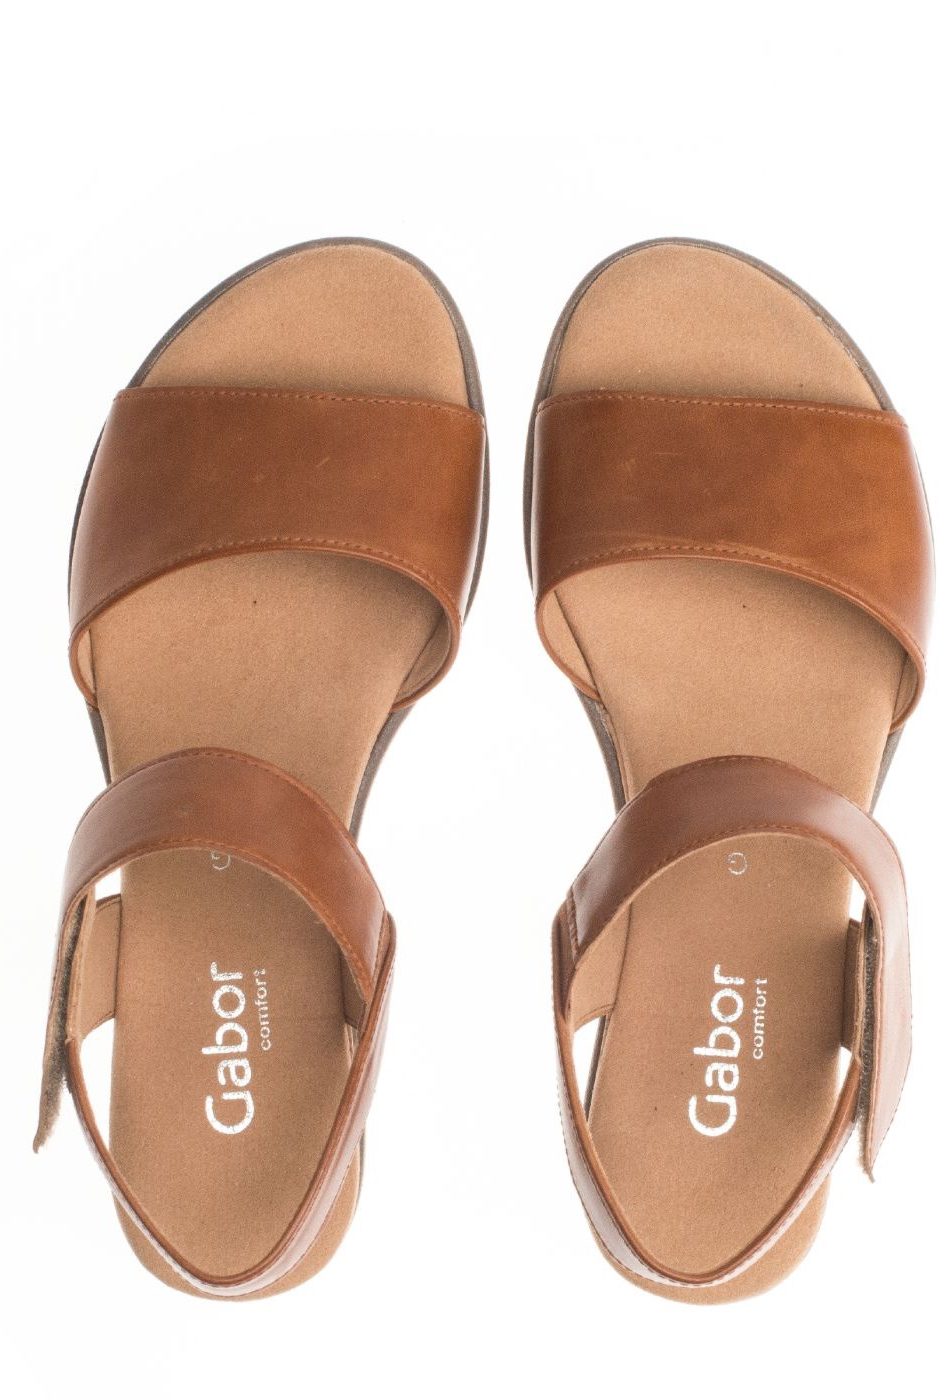 Gabor Shoes Raynor Sandal Camel